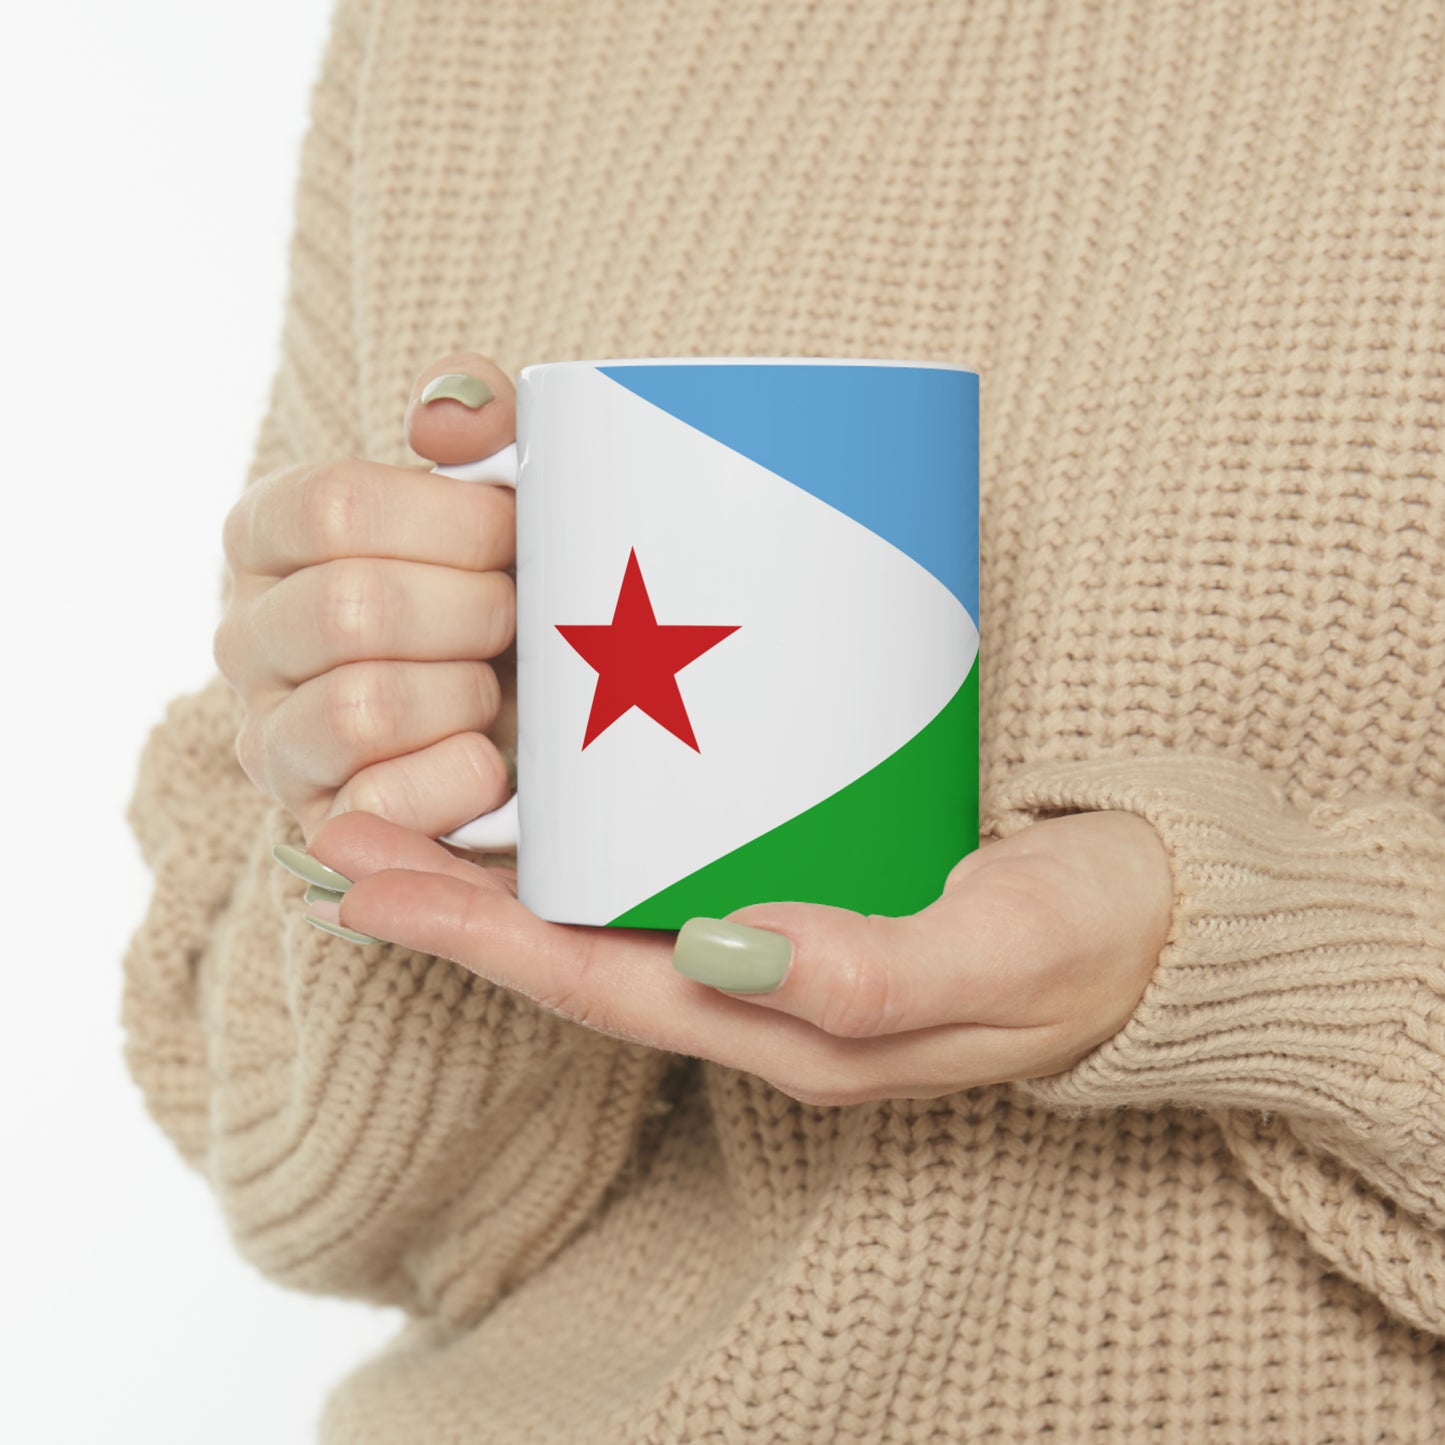 Ceramic Mug 11oz - Djibouti Flag